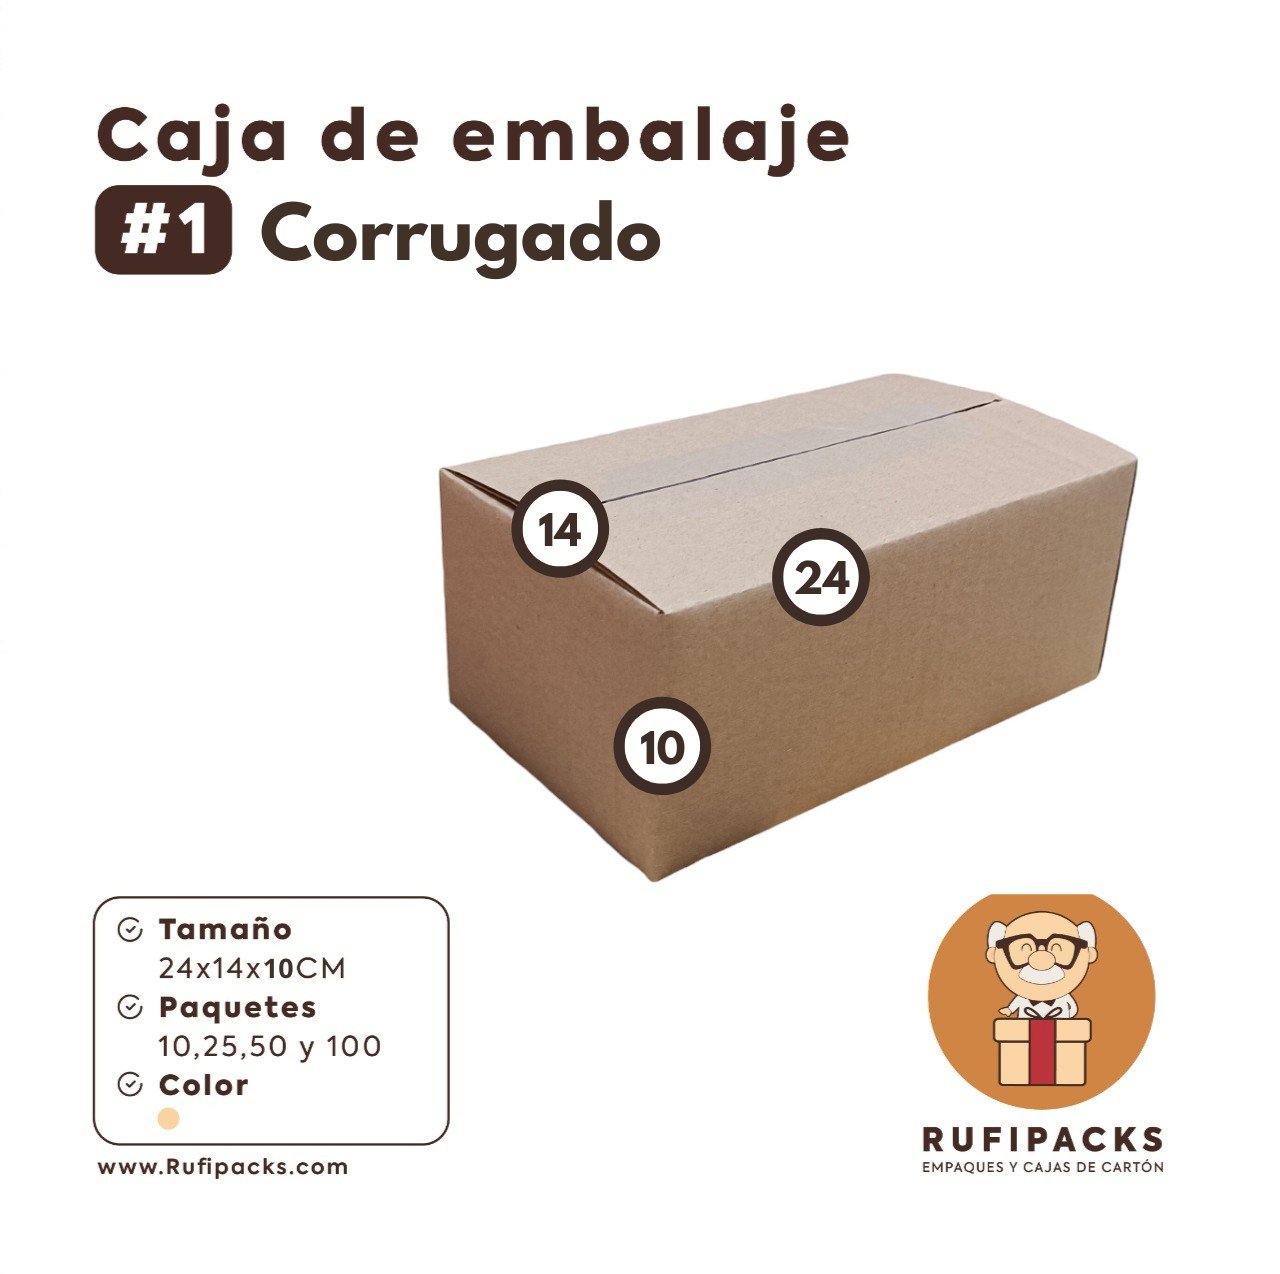 CAJA DE EMBALAJE #3 34X24X24 CORRUGADO - Rufipacks